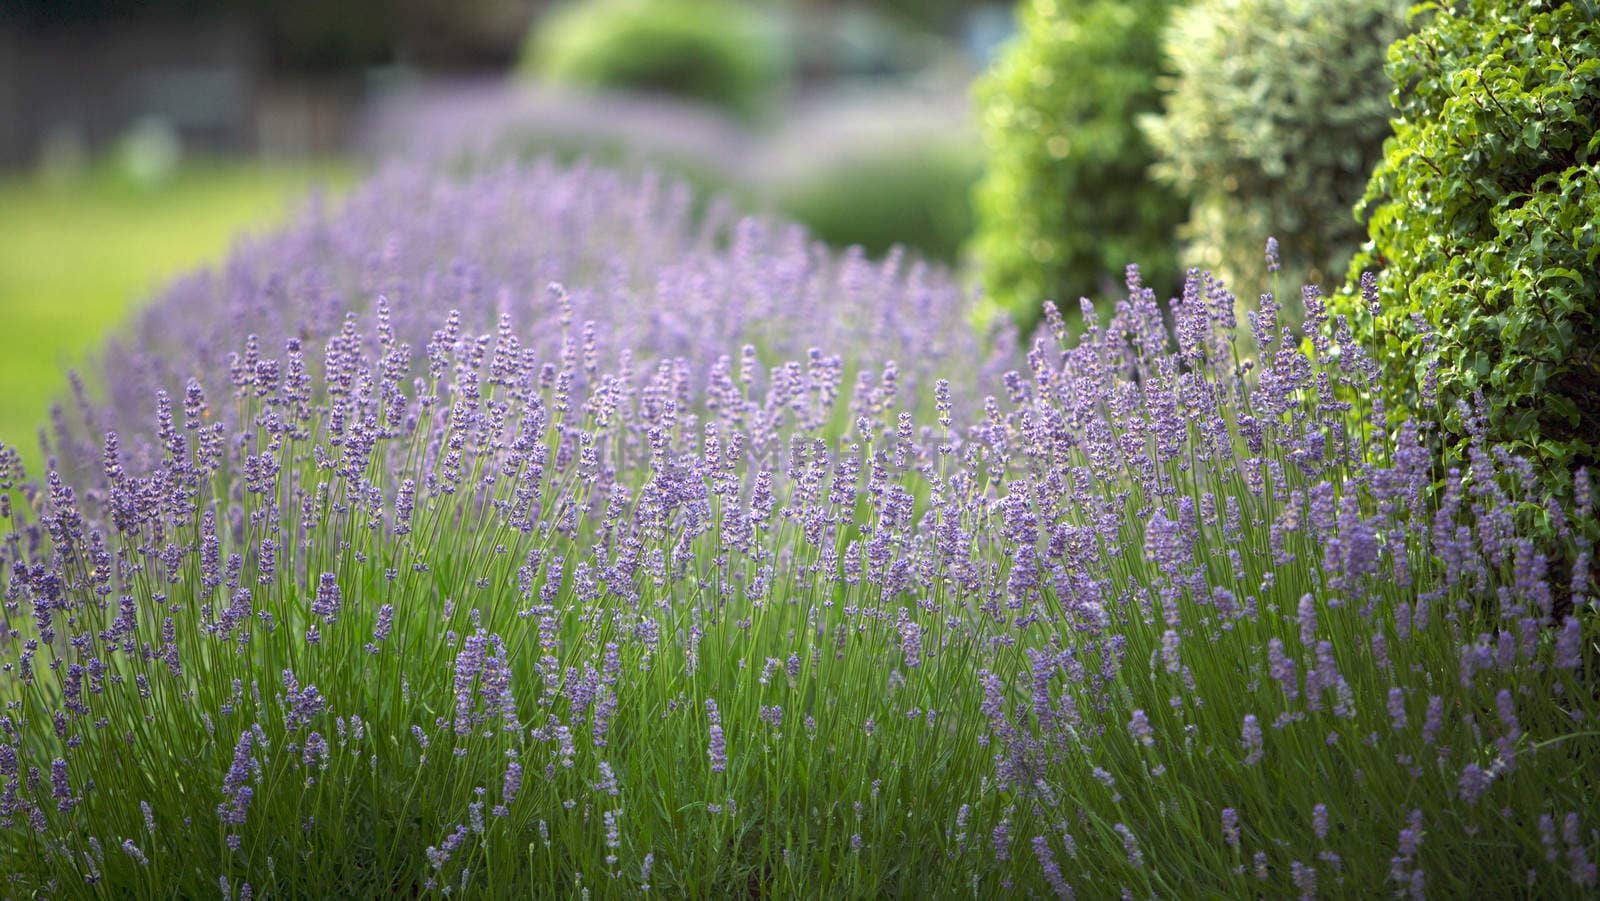 Lavender Flowers in a garden, Lavandula Angustifolia